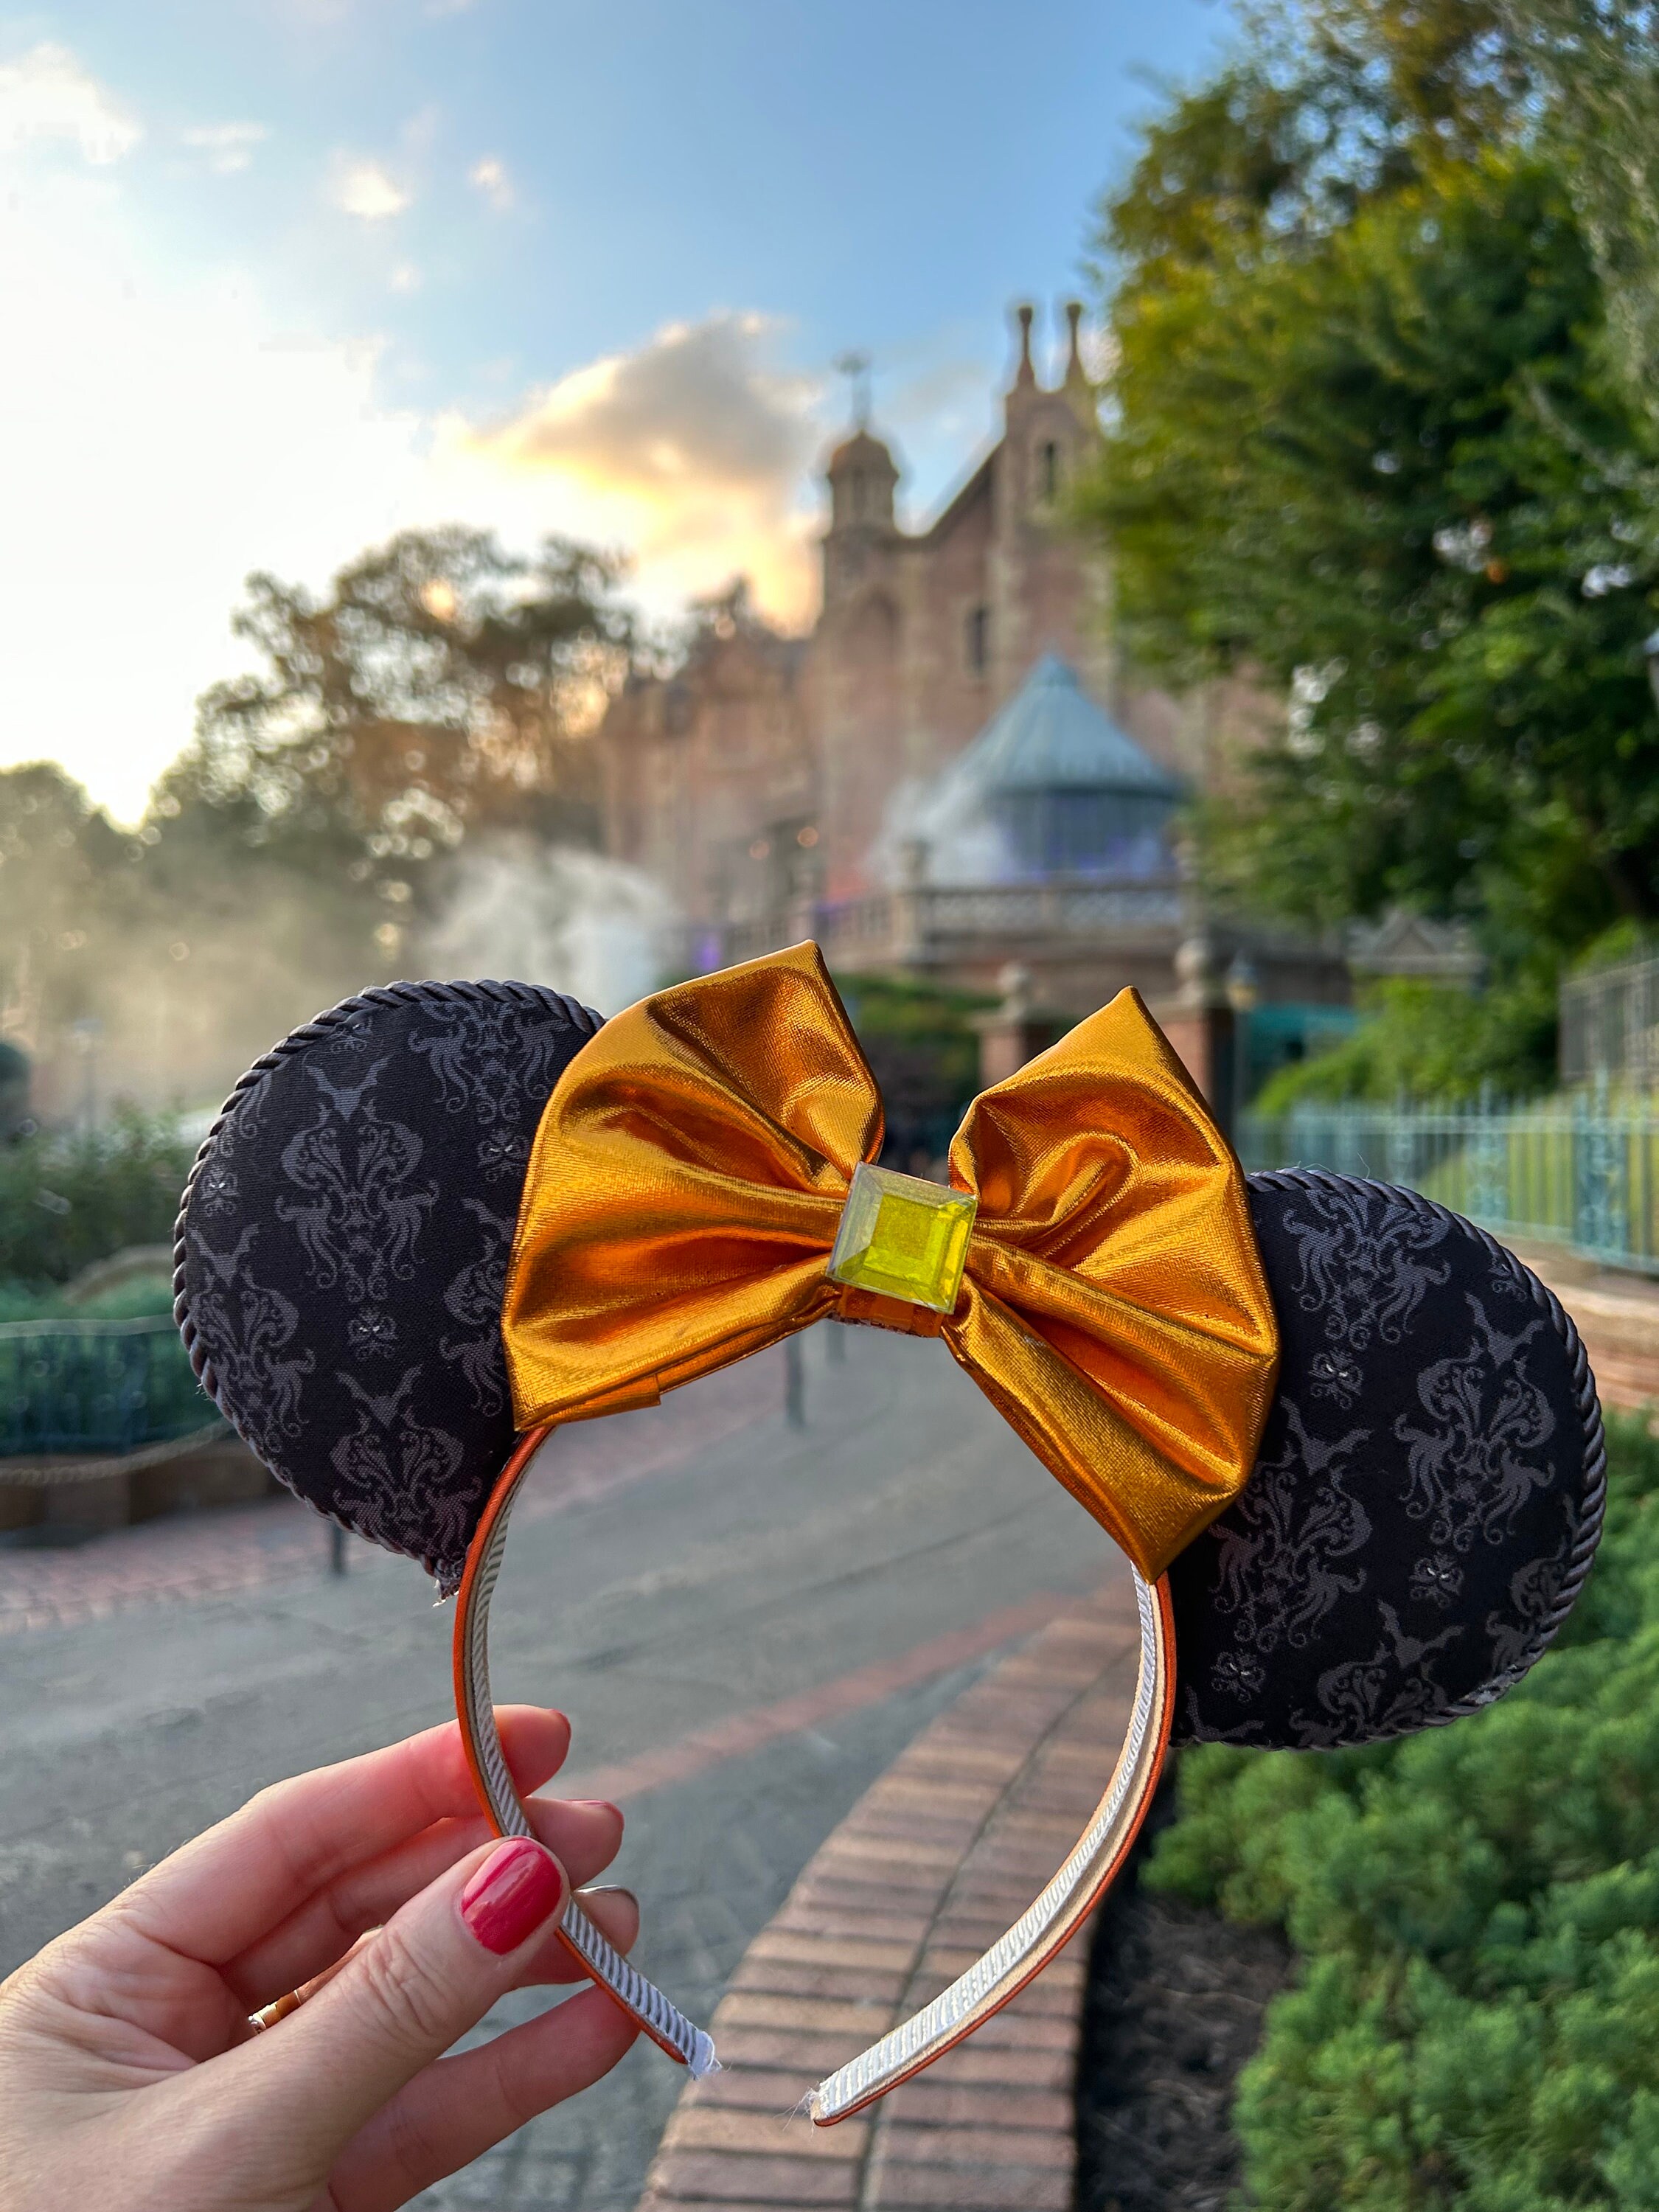 Disney Minnie Mouse Glow-in-the-Dark Spiderweb Ears Headband